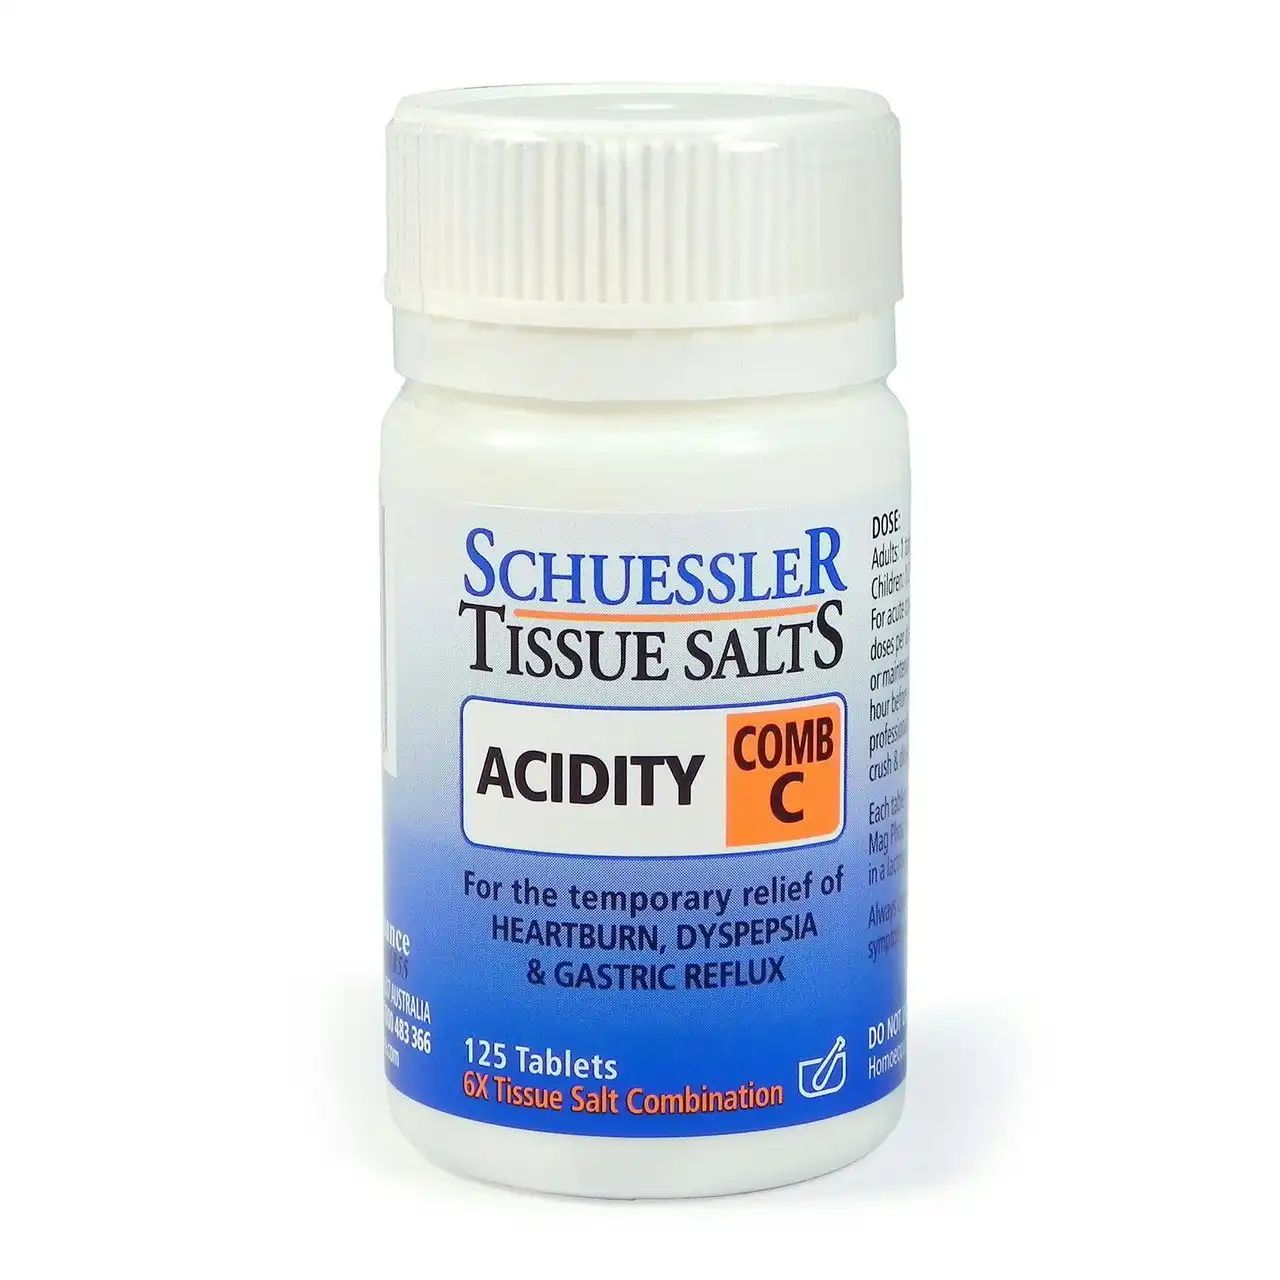 Schuessler Tissue Salts Acidity Comb C 125 Tablets